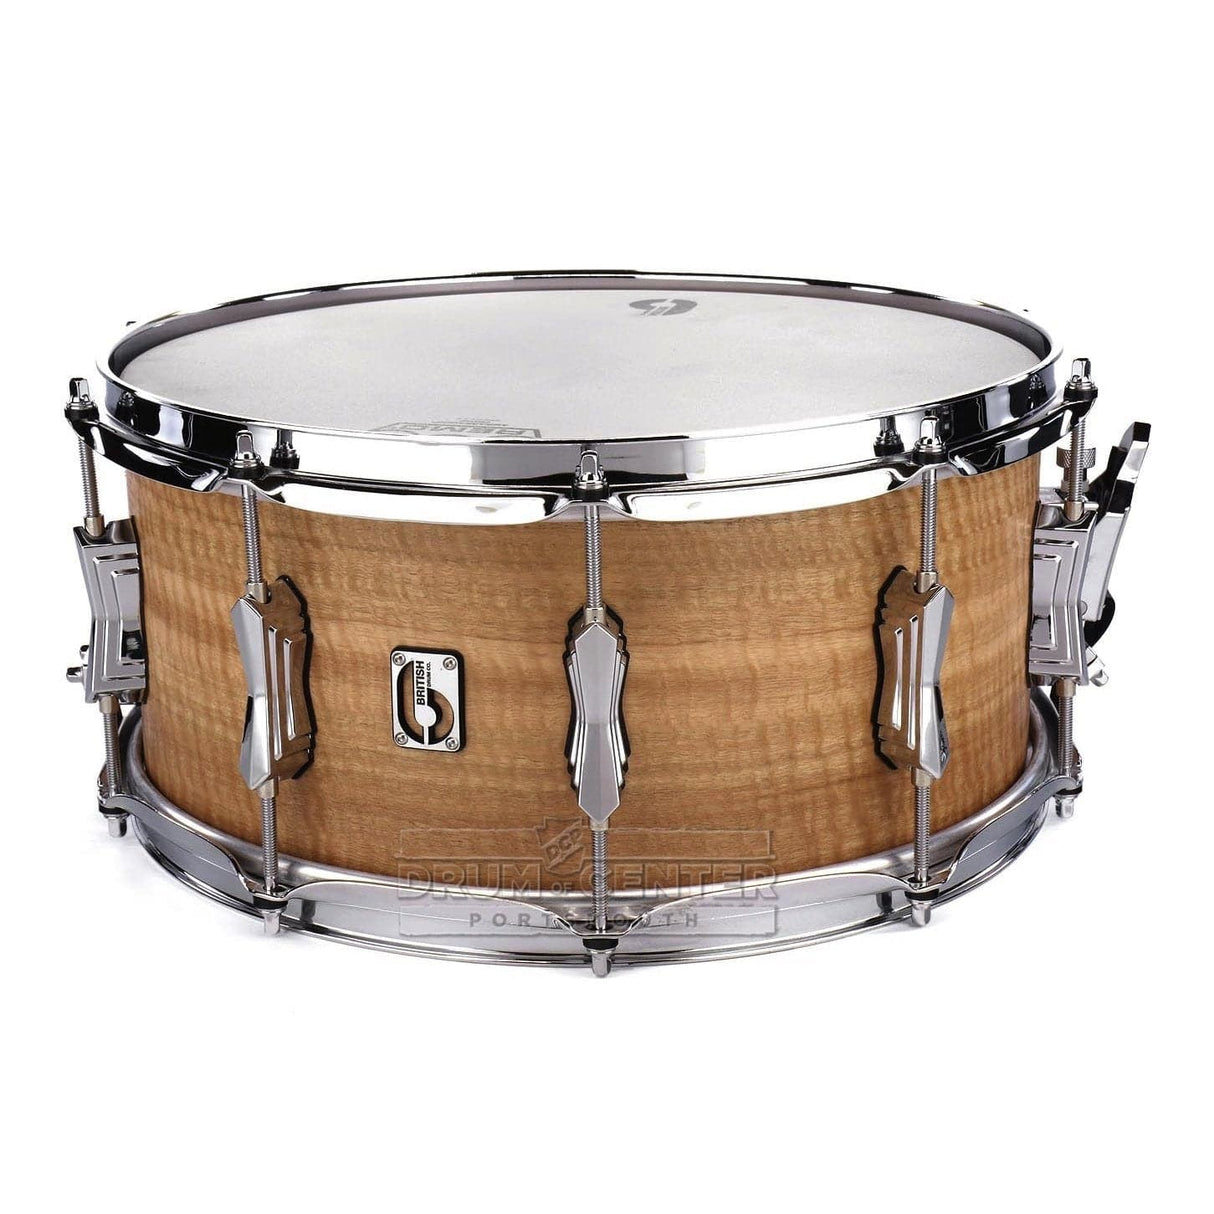 British Drum Company Maverick Snare Drum 14x6.5